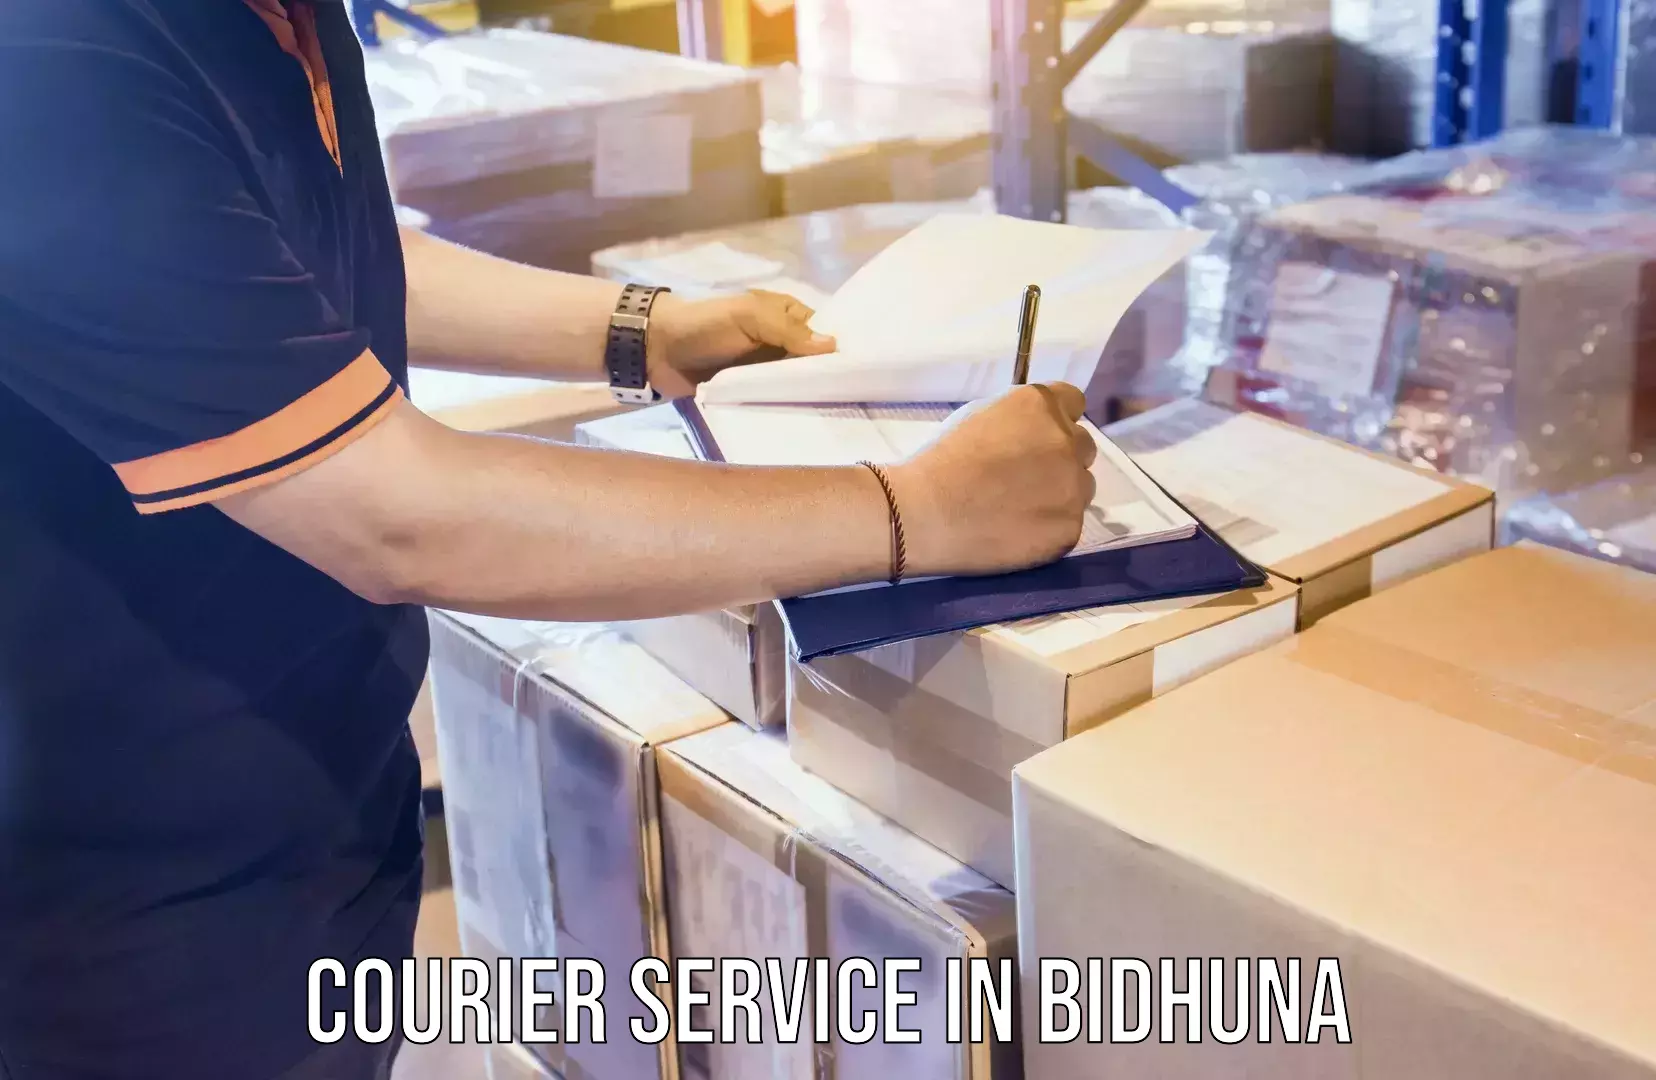 Customer-friendly courier services in Bidhuna